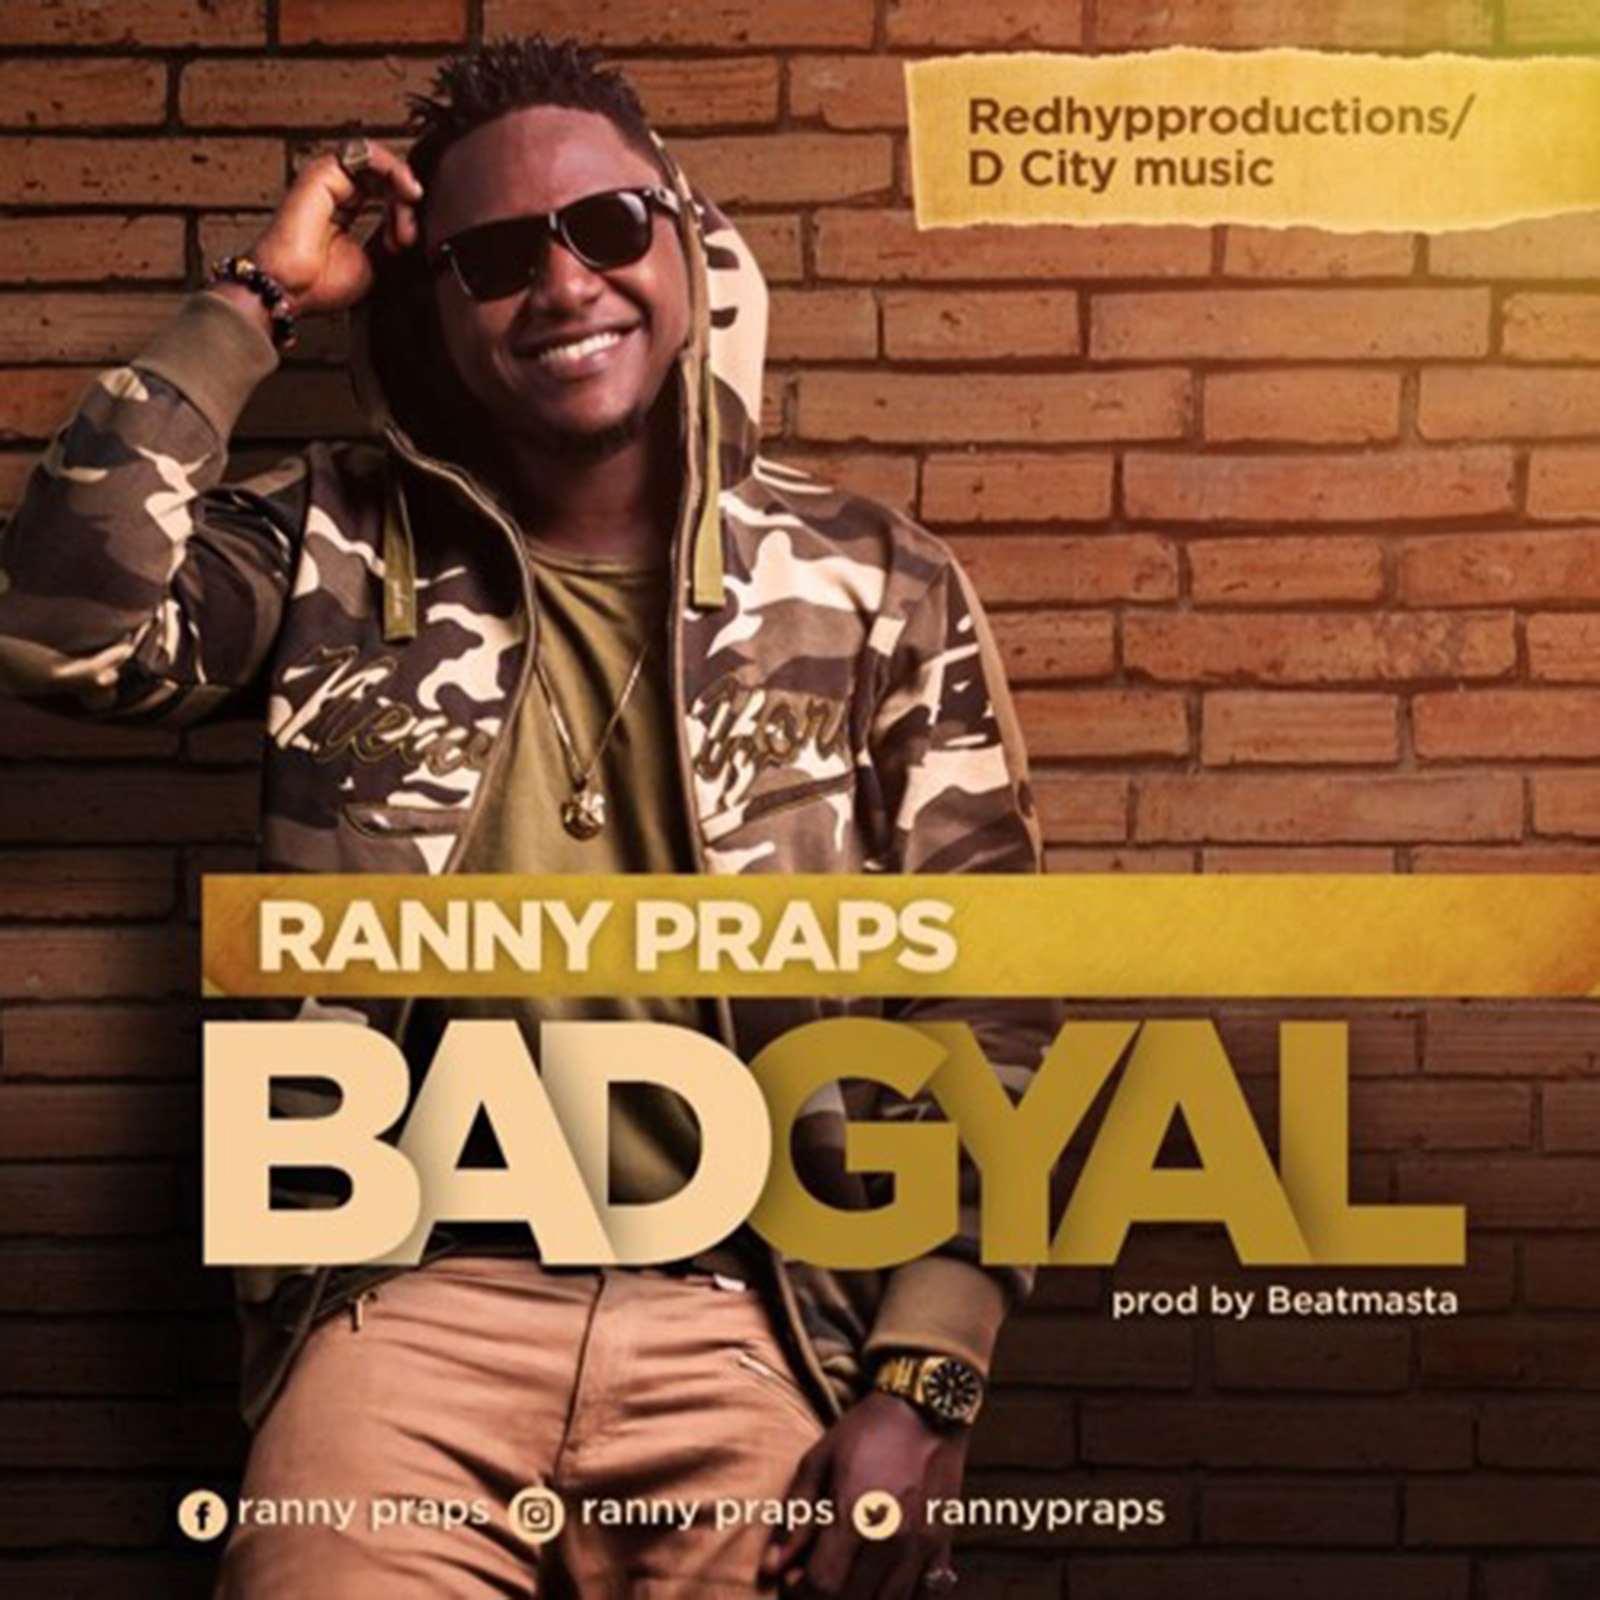 Bad Gyal by Ranny Praps